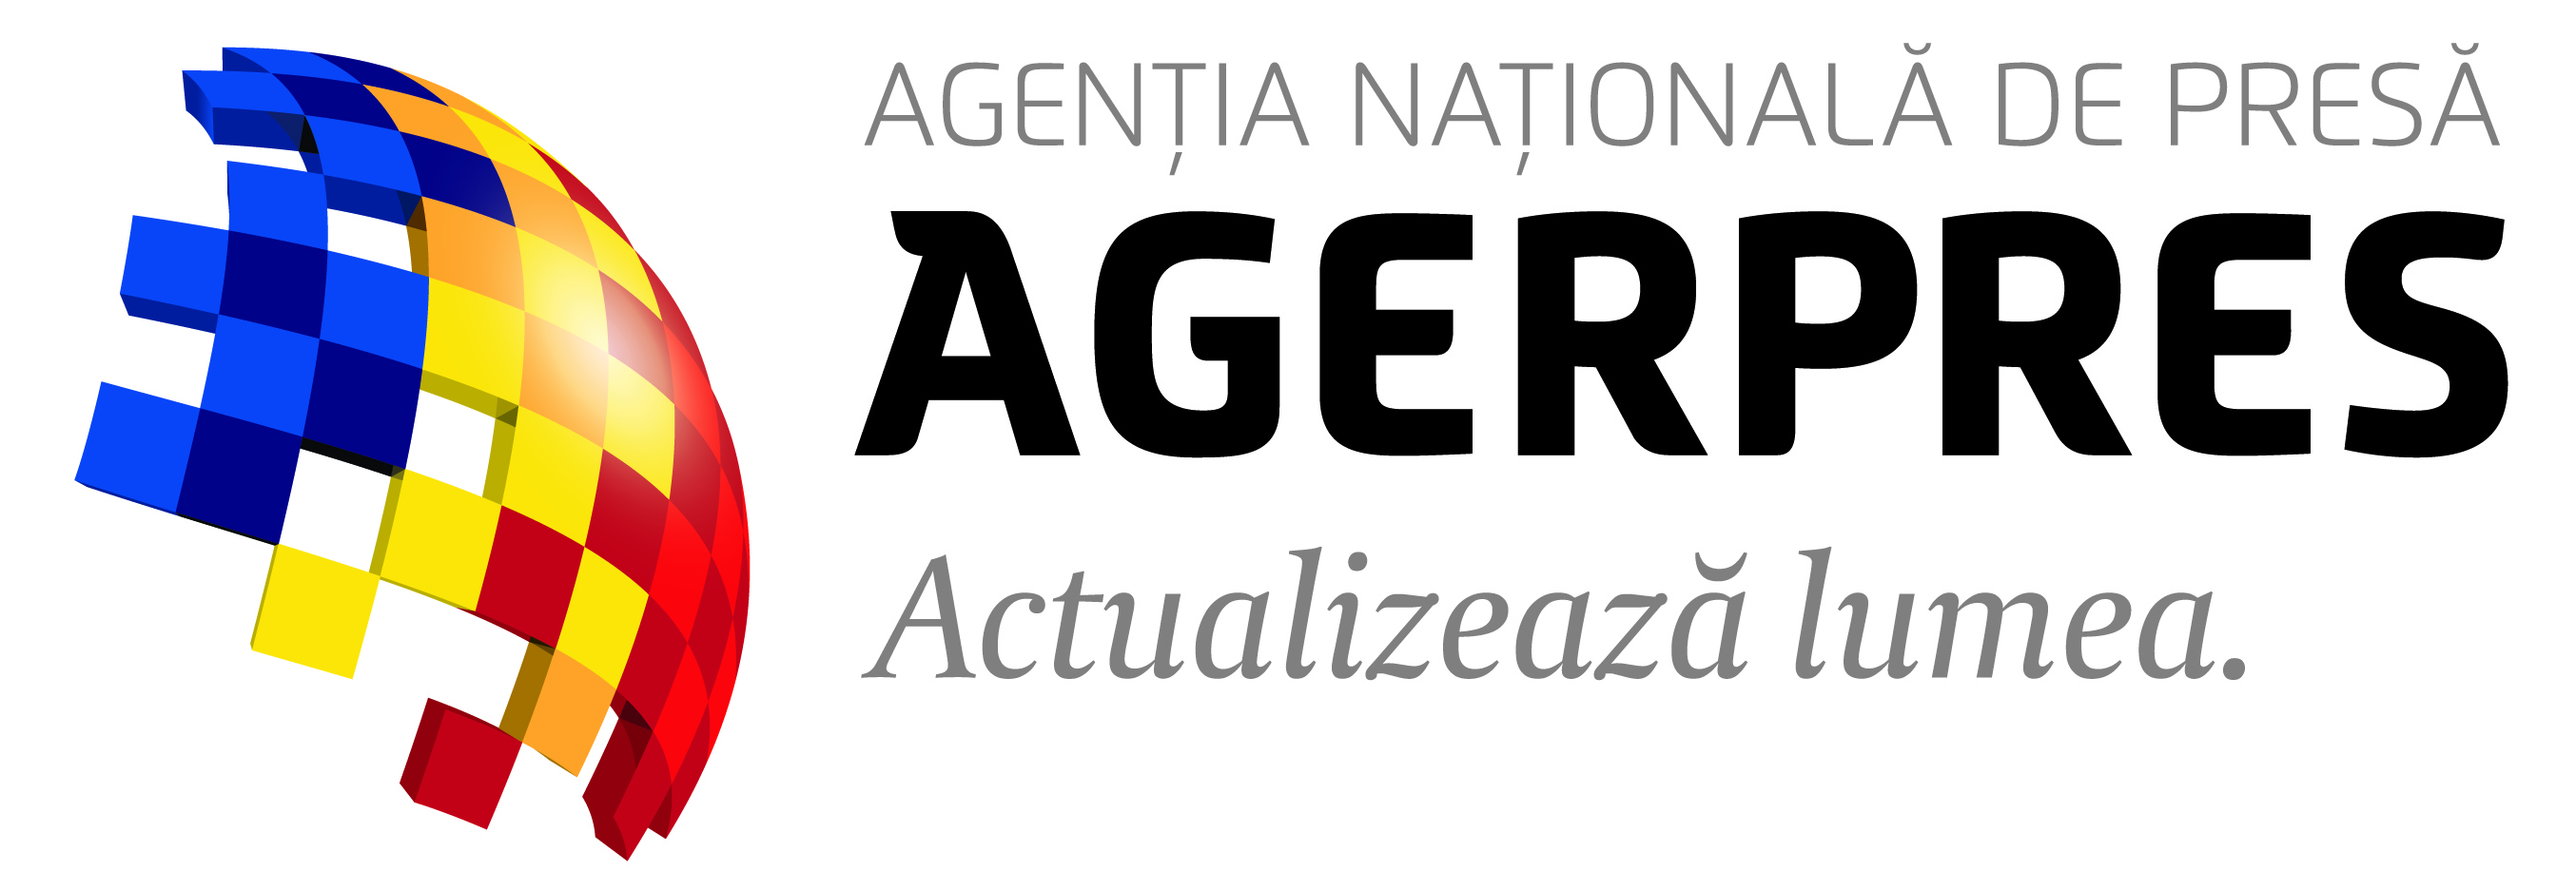 agerpres-logo_normal-ro-tag